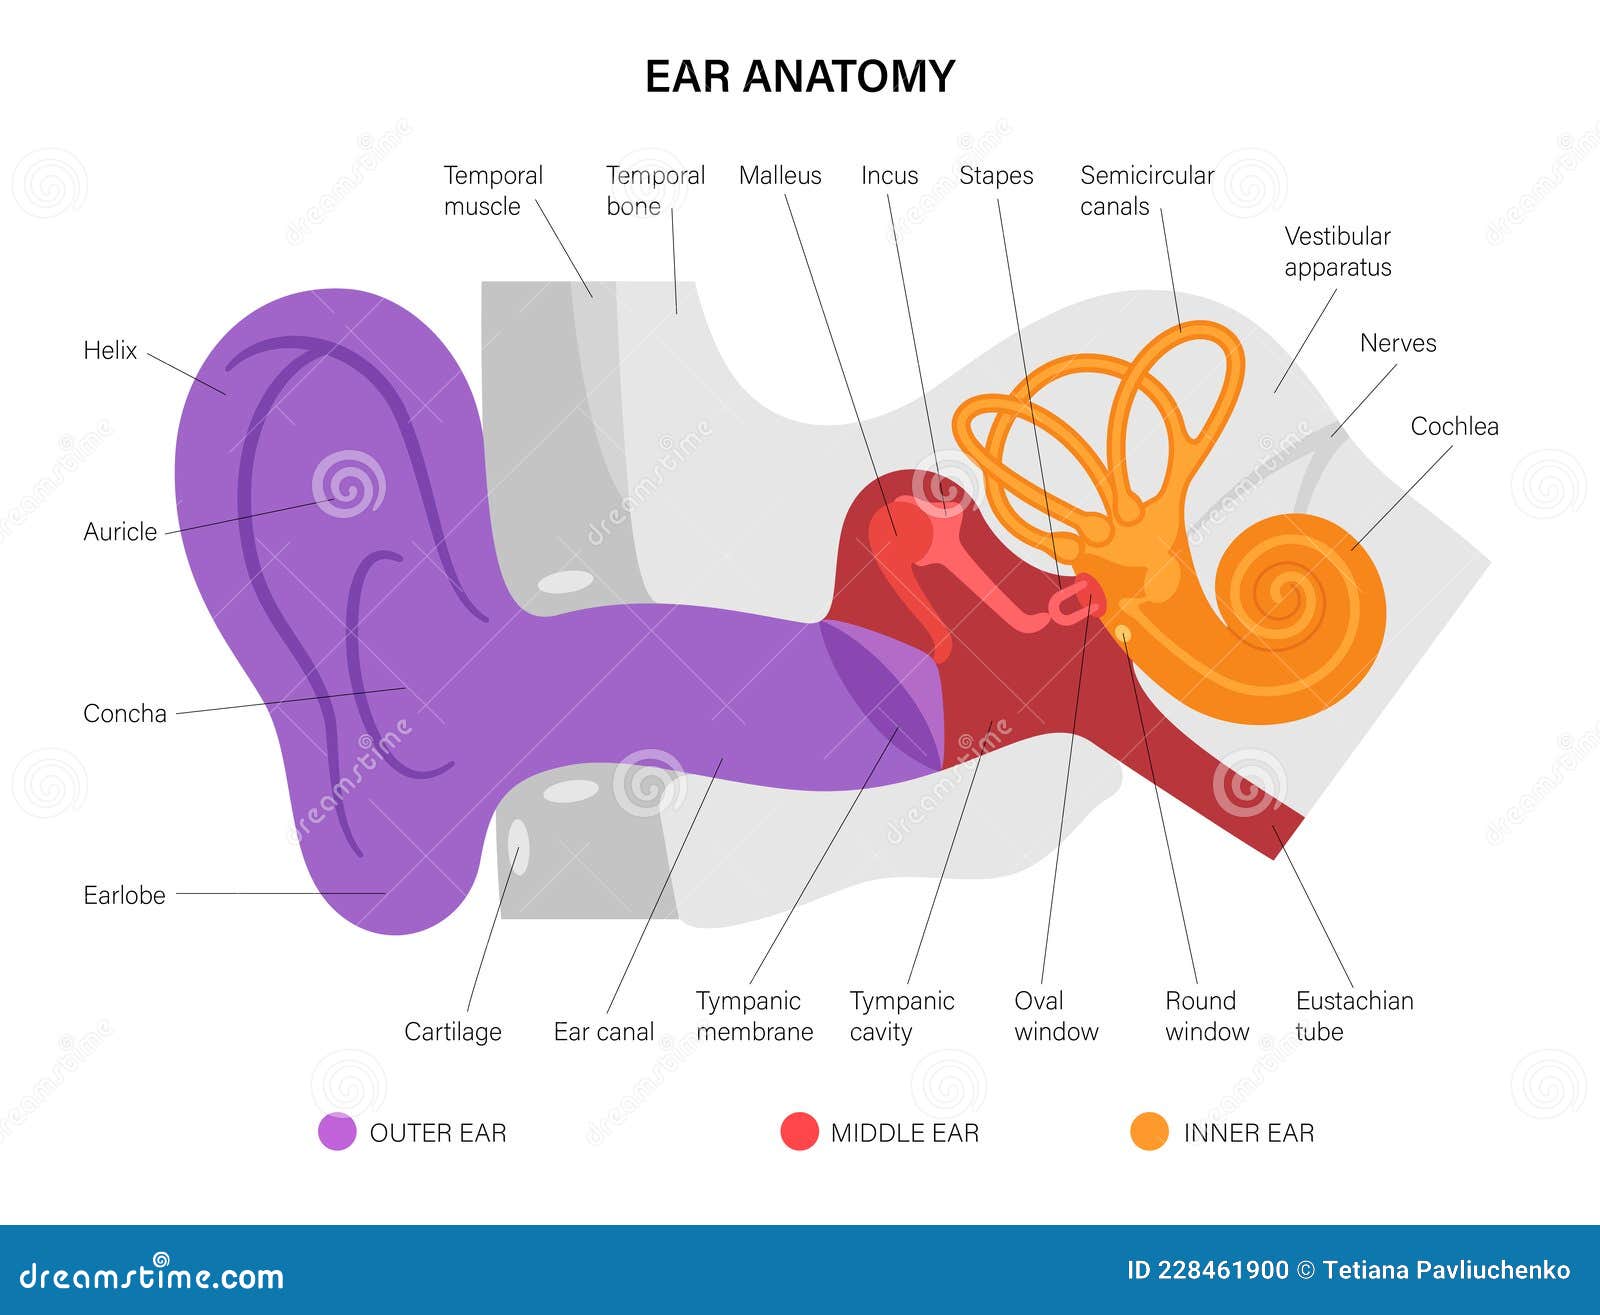 The Human Ear Diagram | Quizlet